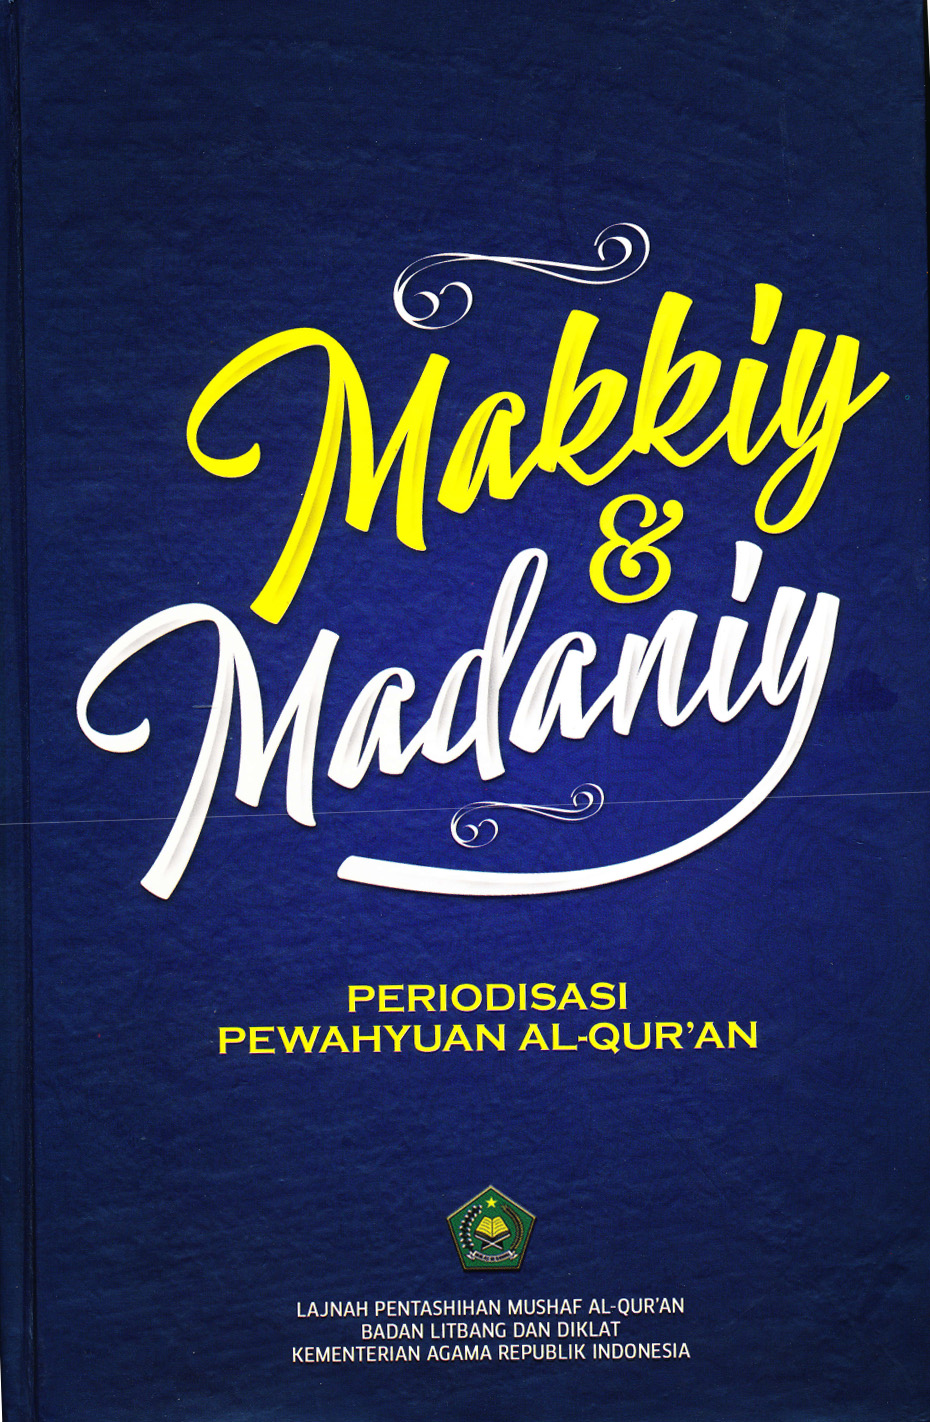 Periodisasi Pewahyuan Ayat dan Surah Al-Qur'an (Makkiy & Madaniy)